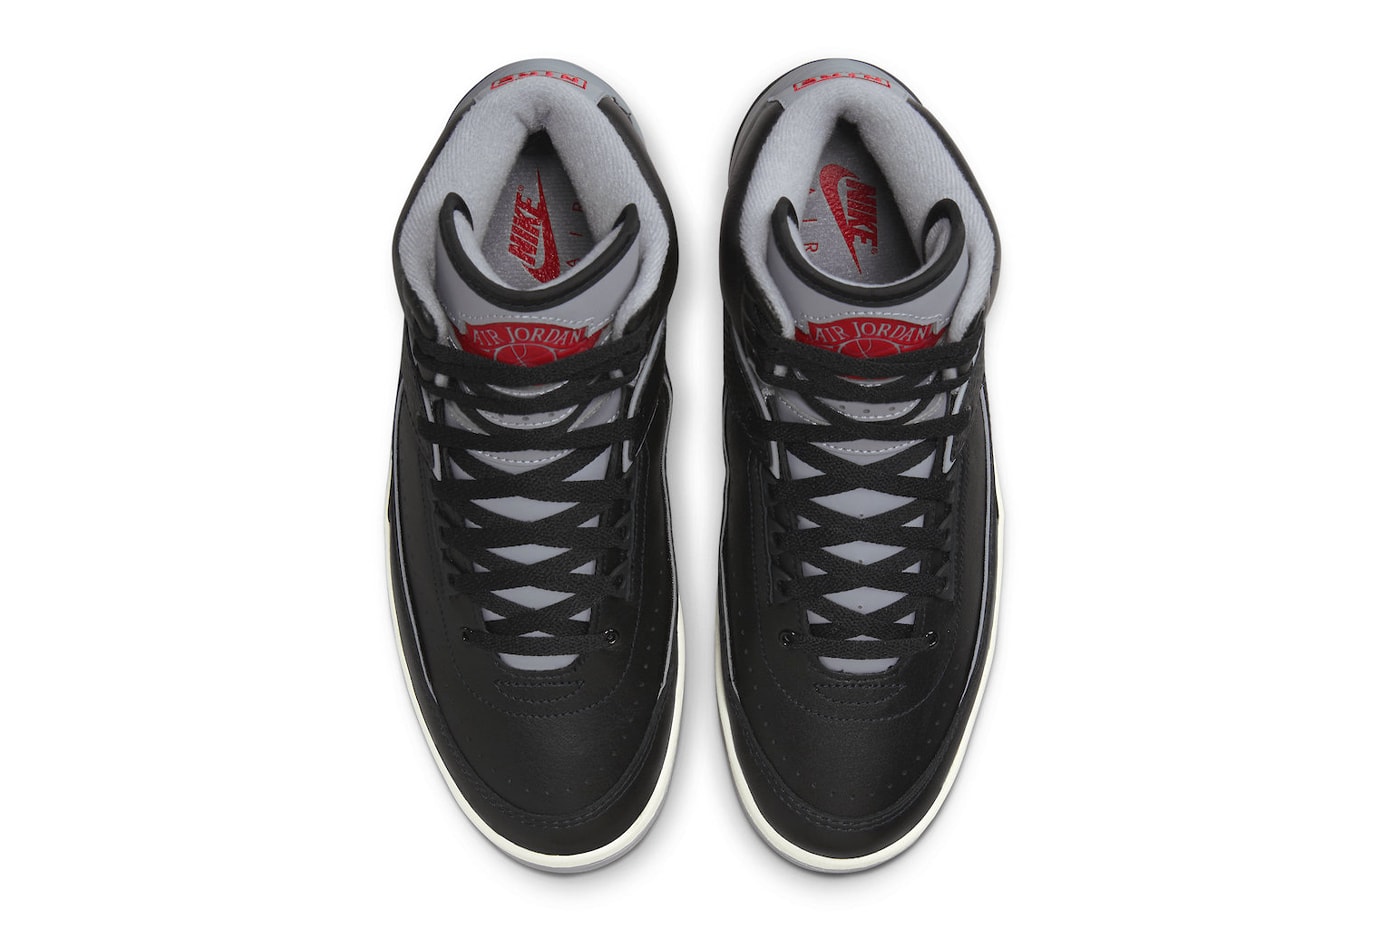 Air Jordan 2 "Black Cement" Has an Official Release Date DR8884-001 black/Cement Grey-Fire Red-Sail